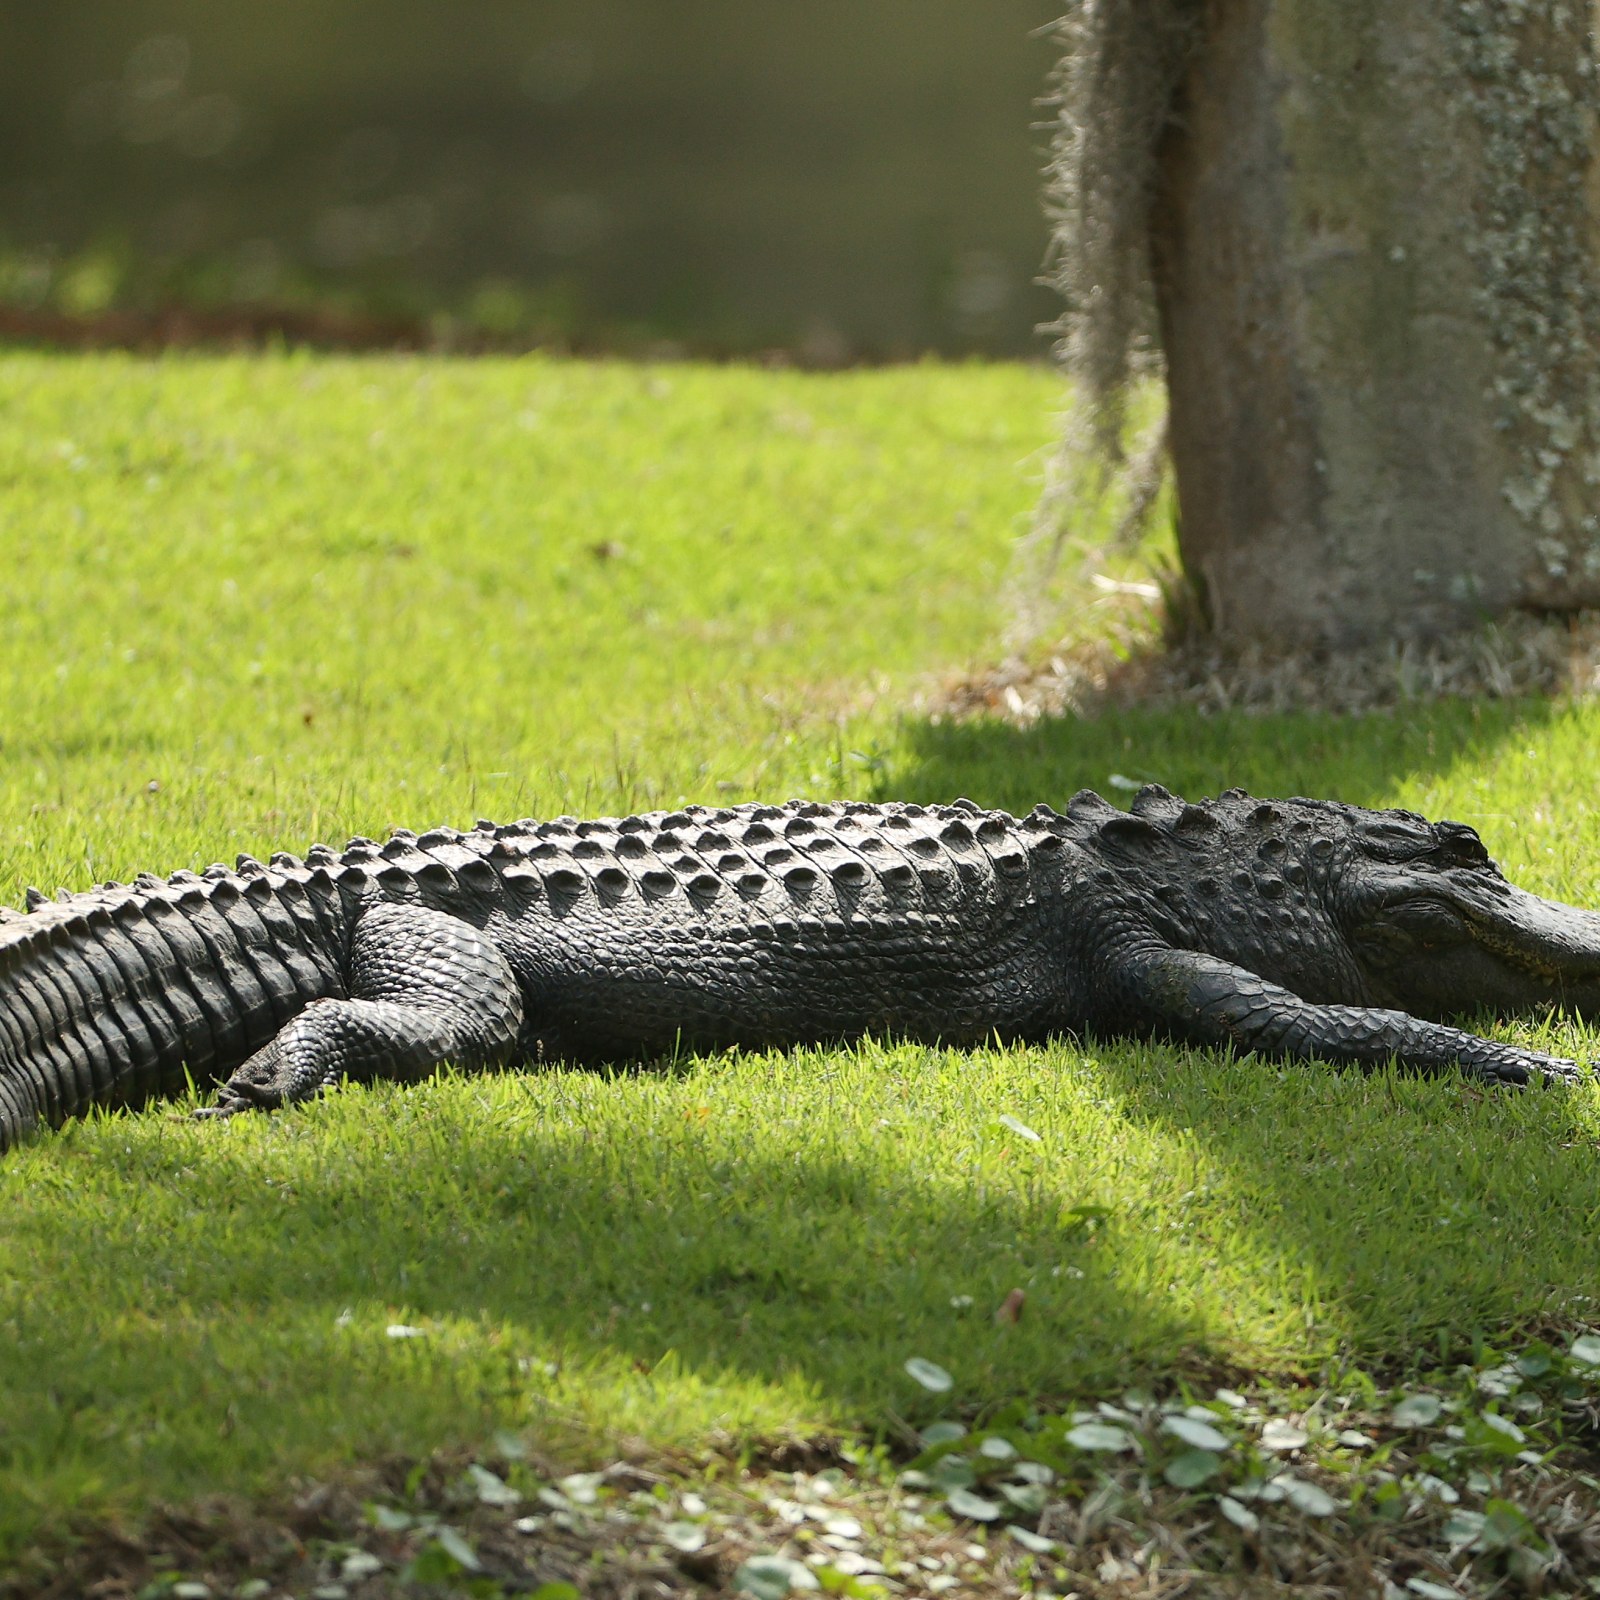 Monster' 10-Foot Long Alligator Caught Roaming Streets on Video